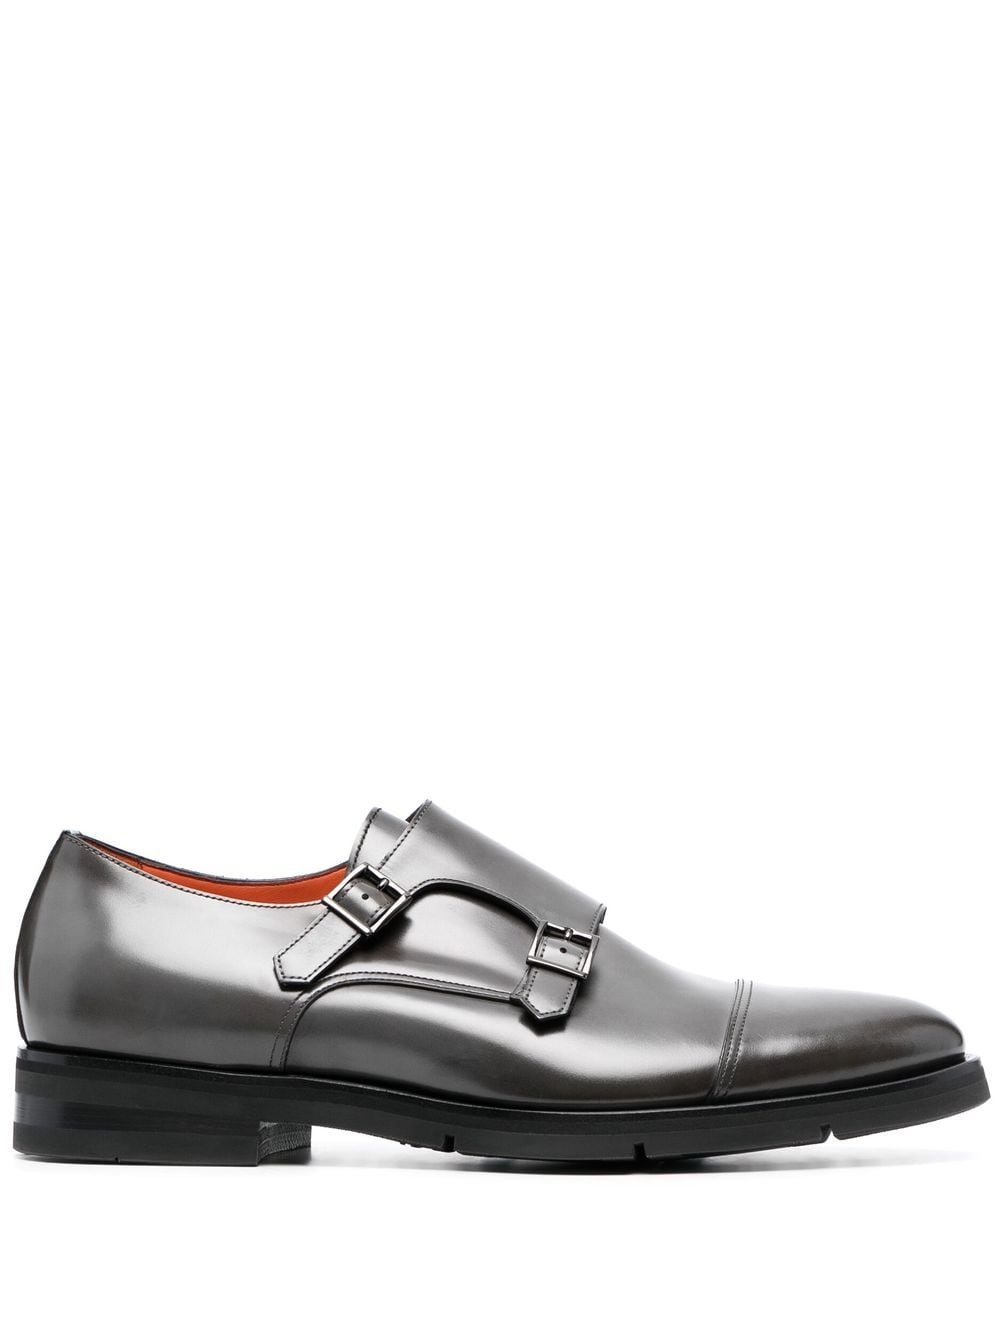 Santoni buckled leather shoes - Grey von Santoni